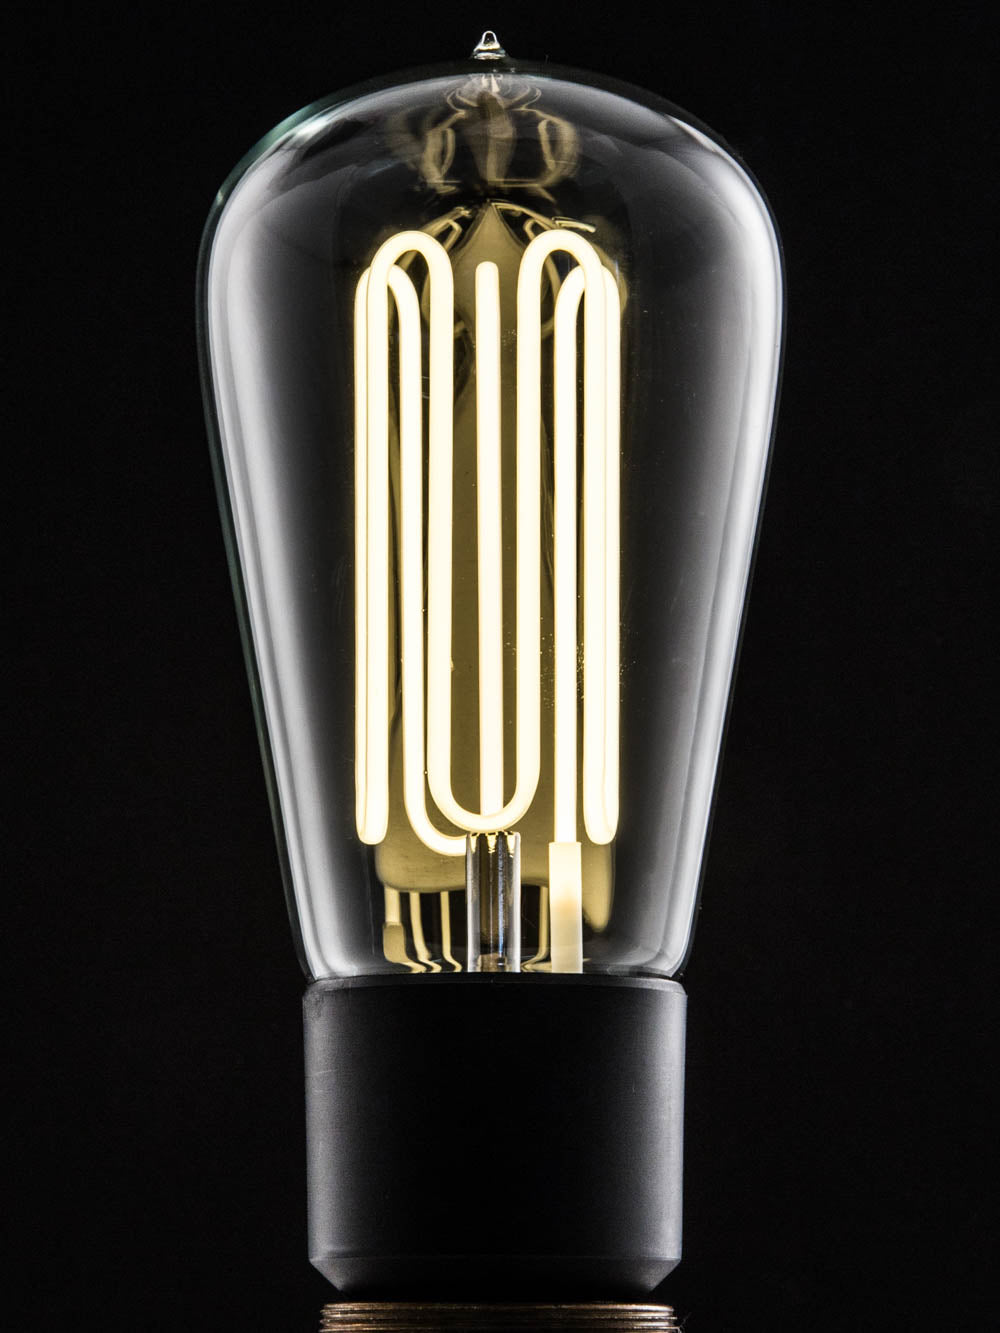 Pear Shape Eco-Filament Bulb | E27 | X 9 Bundle | End-Of-Line